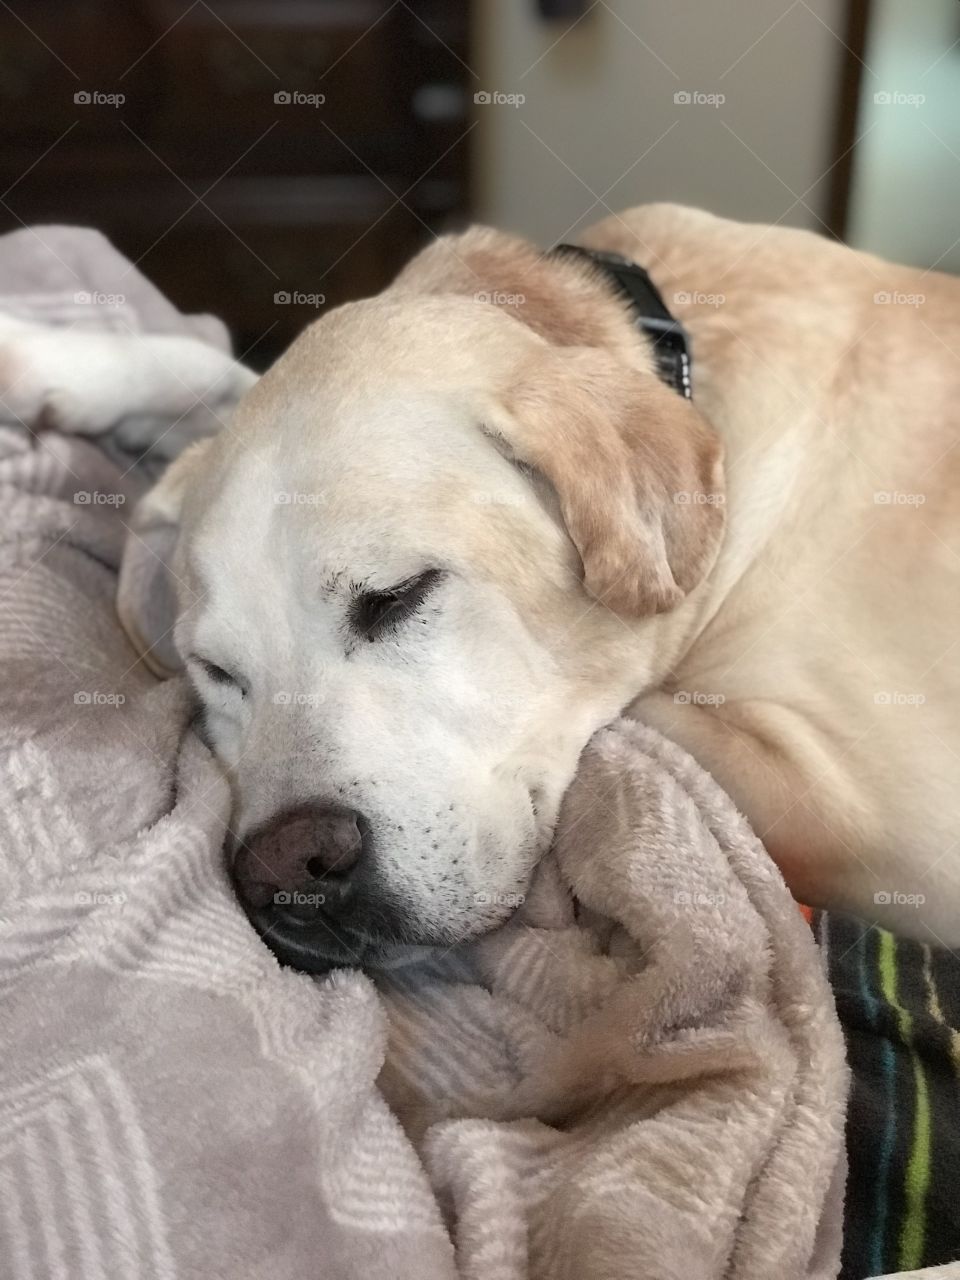 Buster the Labrador retriever taking a nap in a rainy day